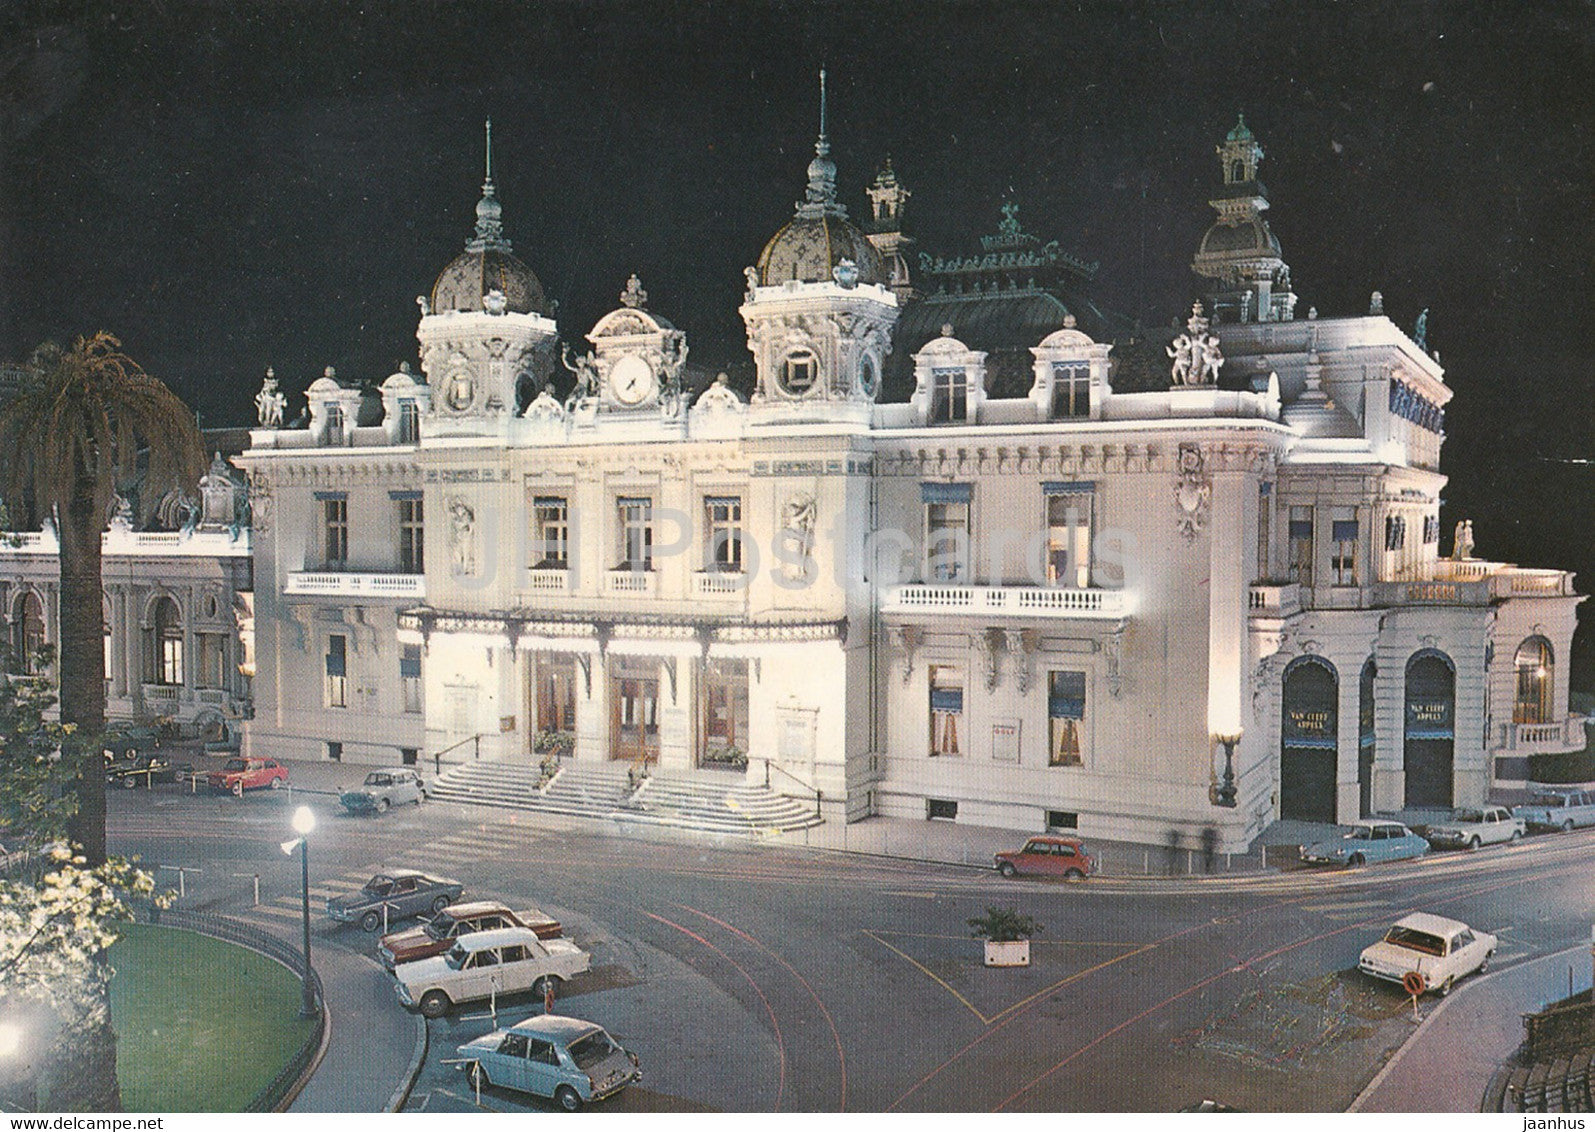 Monte Carlo - Les Illuminations du Casino - car - Monaco - unused - JH Postcards